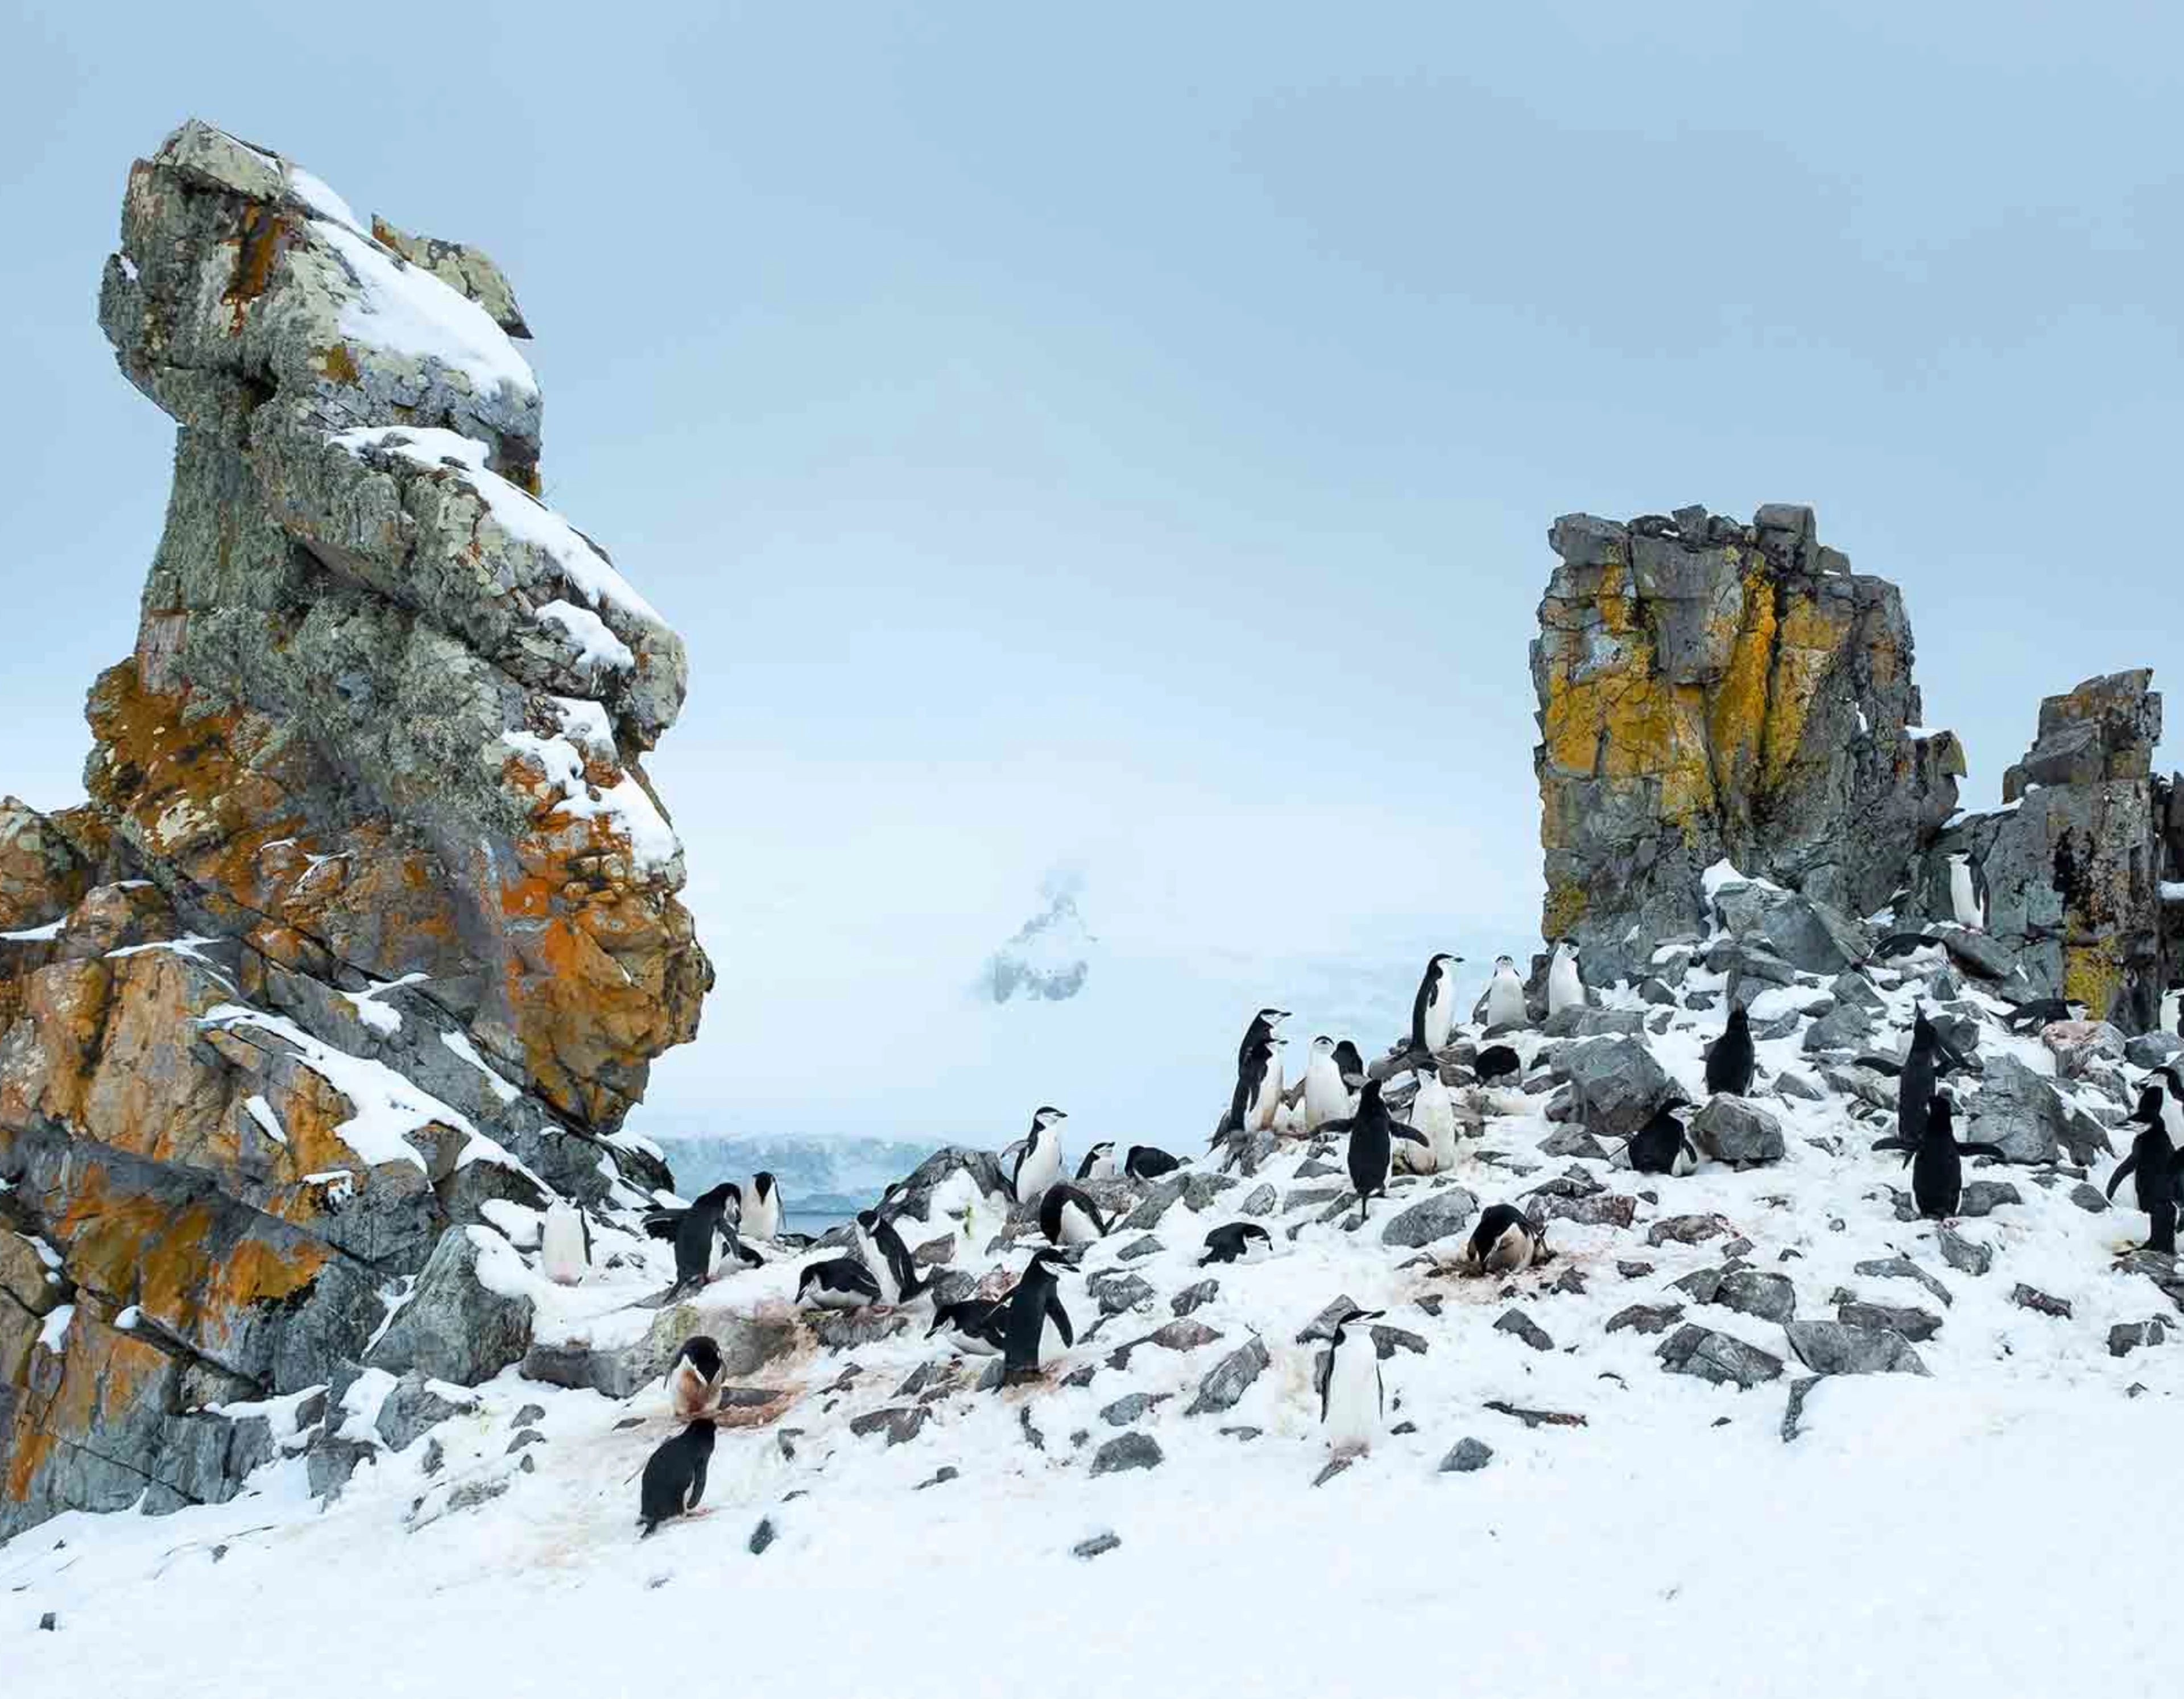 Penguins in the rocky Antarctic landscape